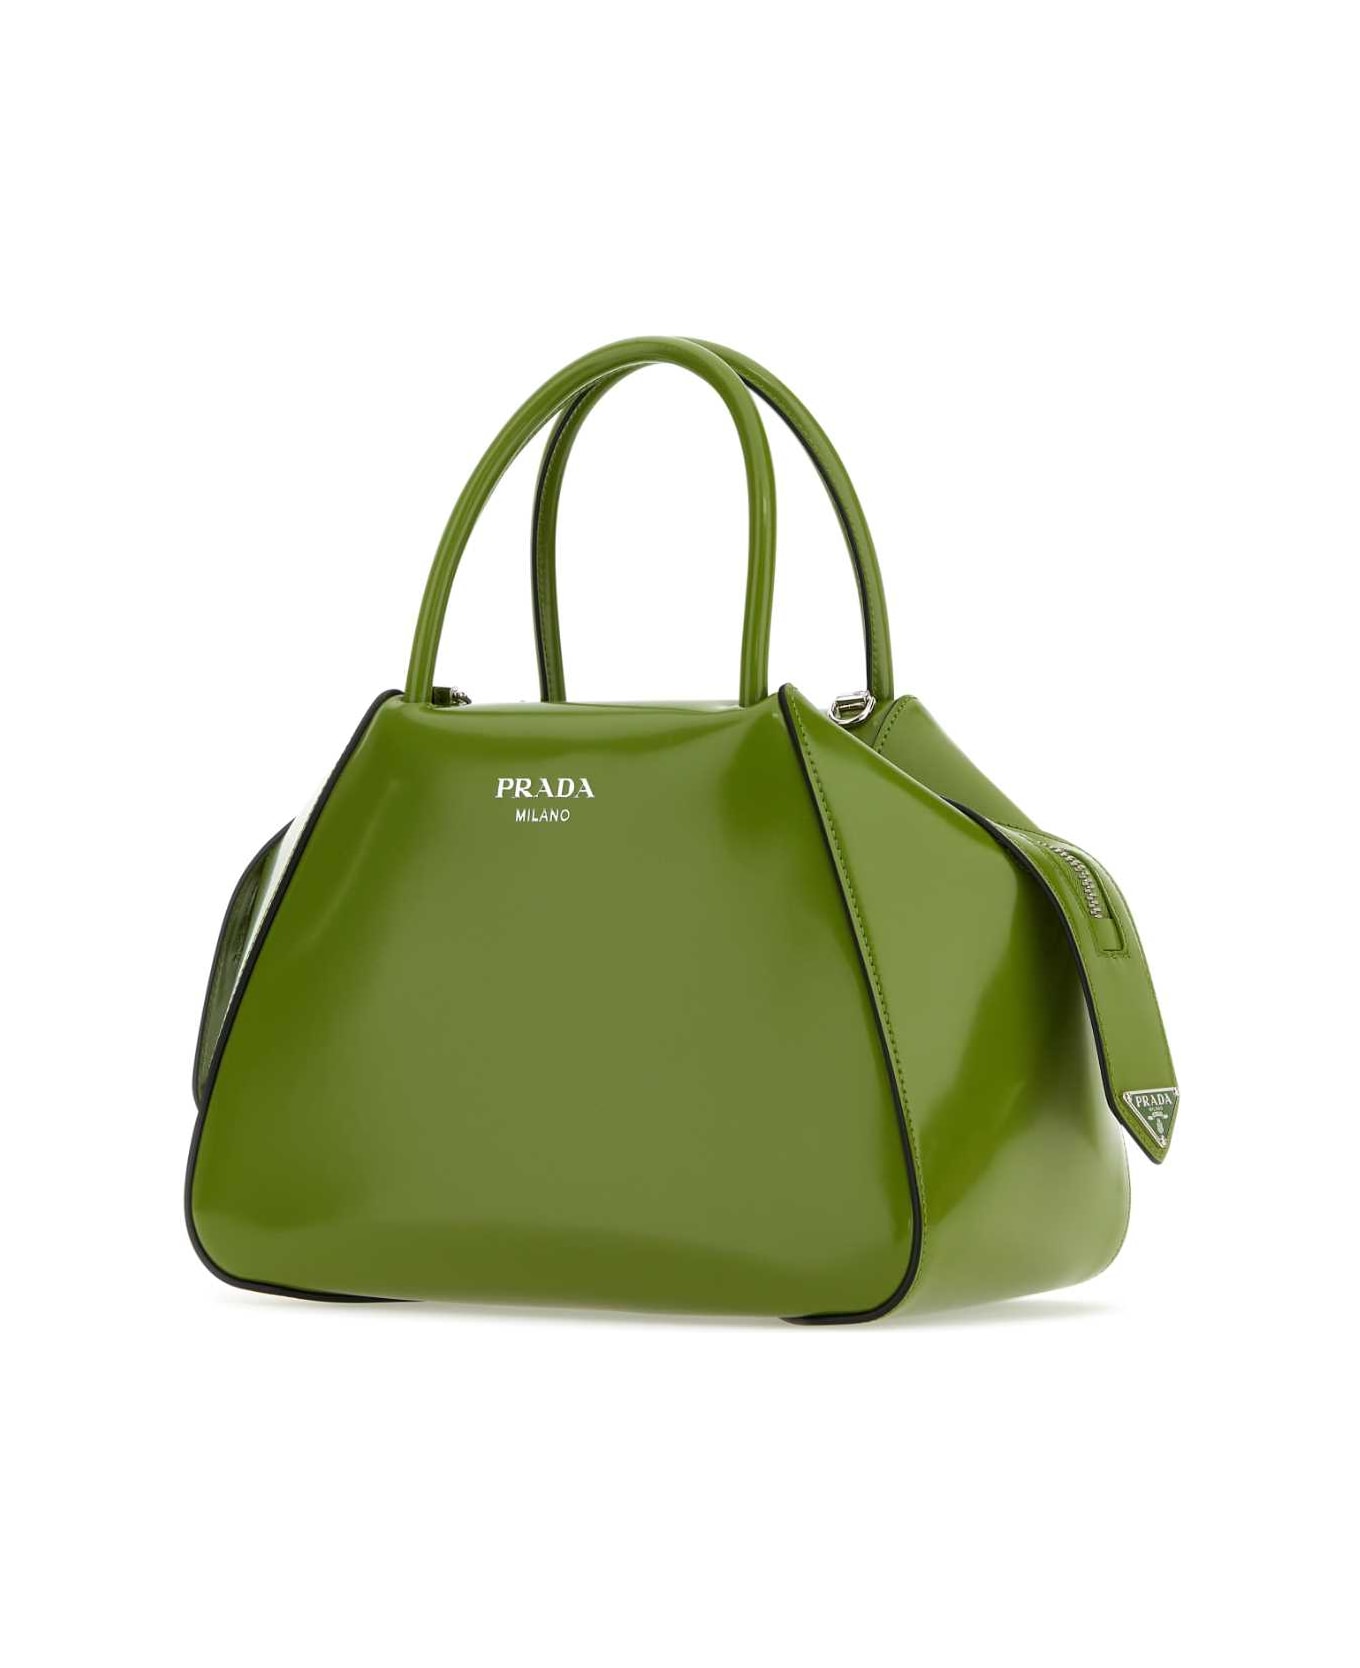 Prada Green Leather Handbag - FELCE